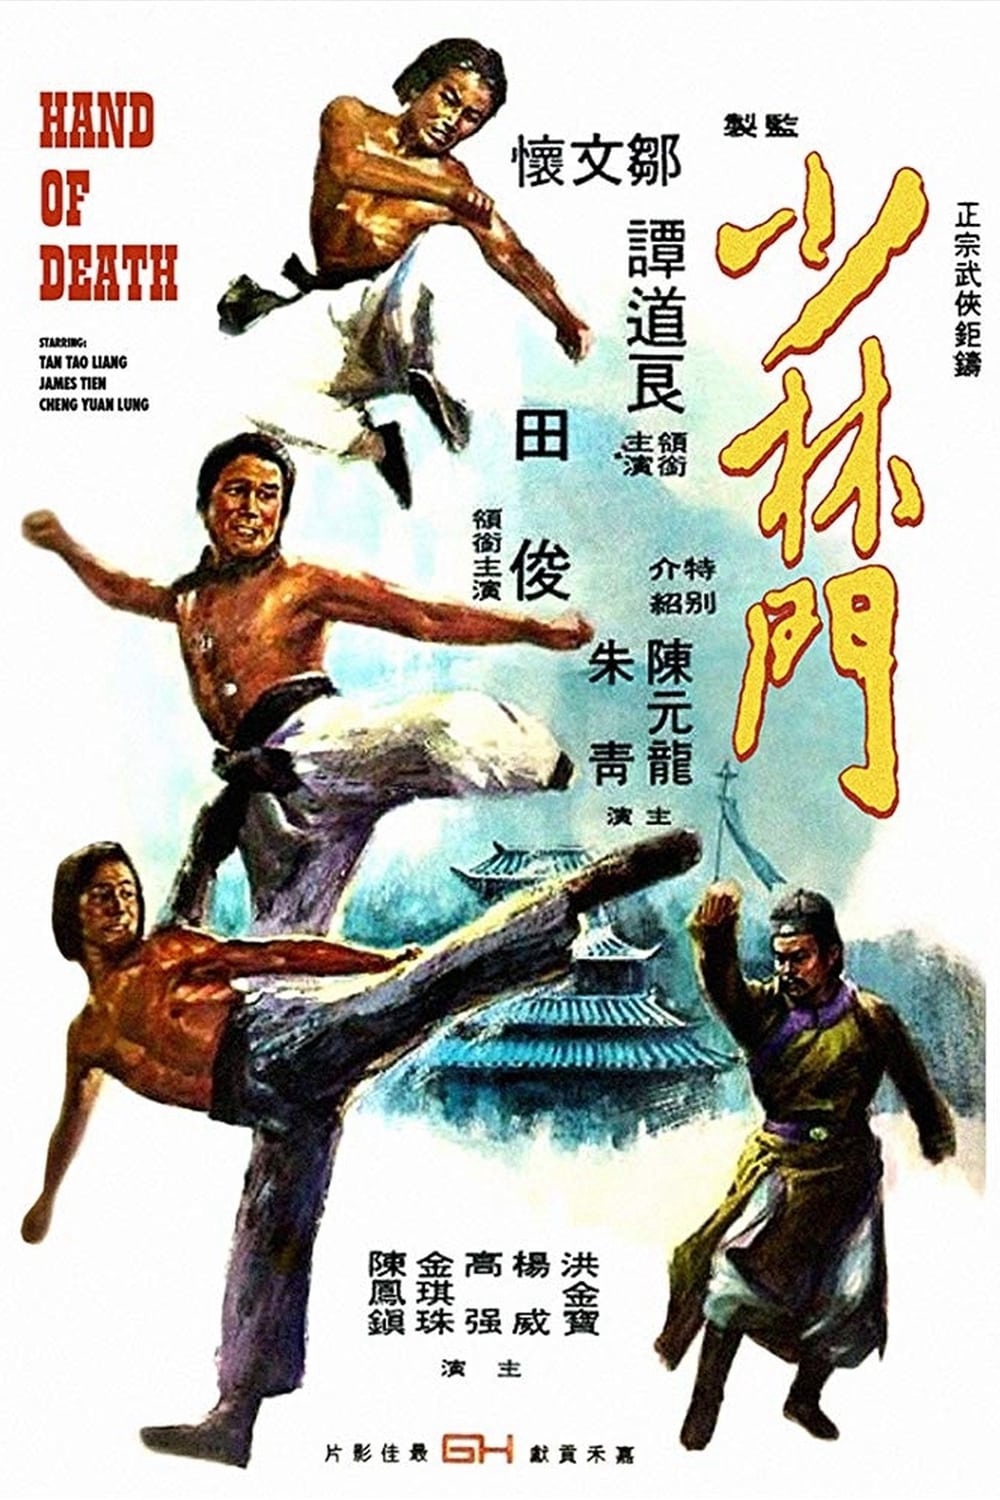 Poster Phim Thiếu Lâm Môn (Hand of Death (Shao Lin men))